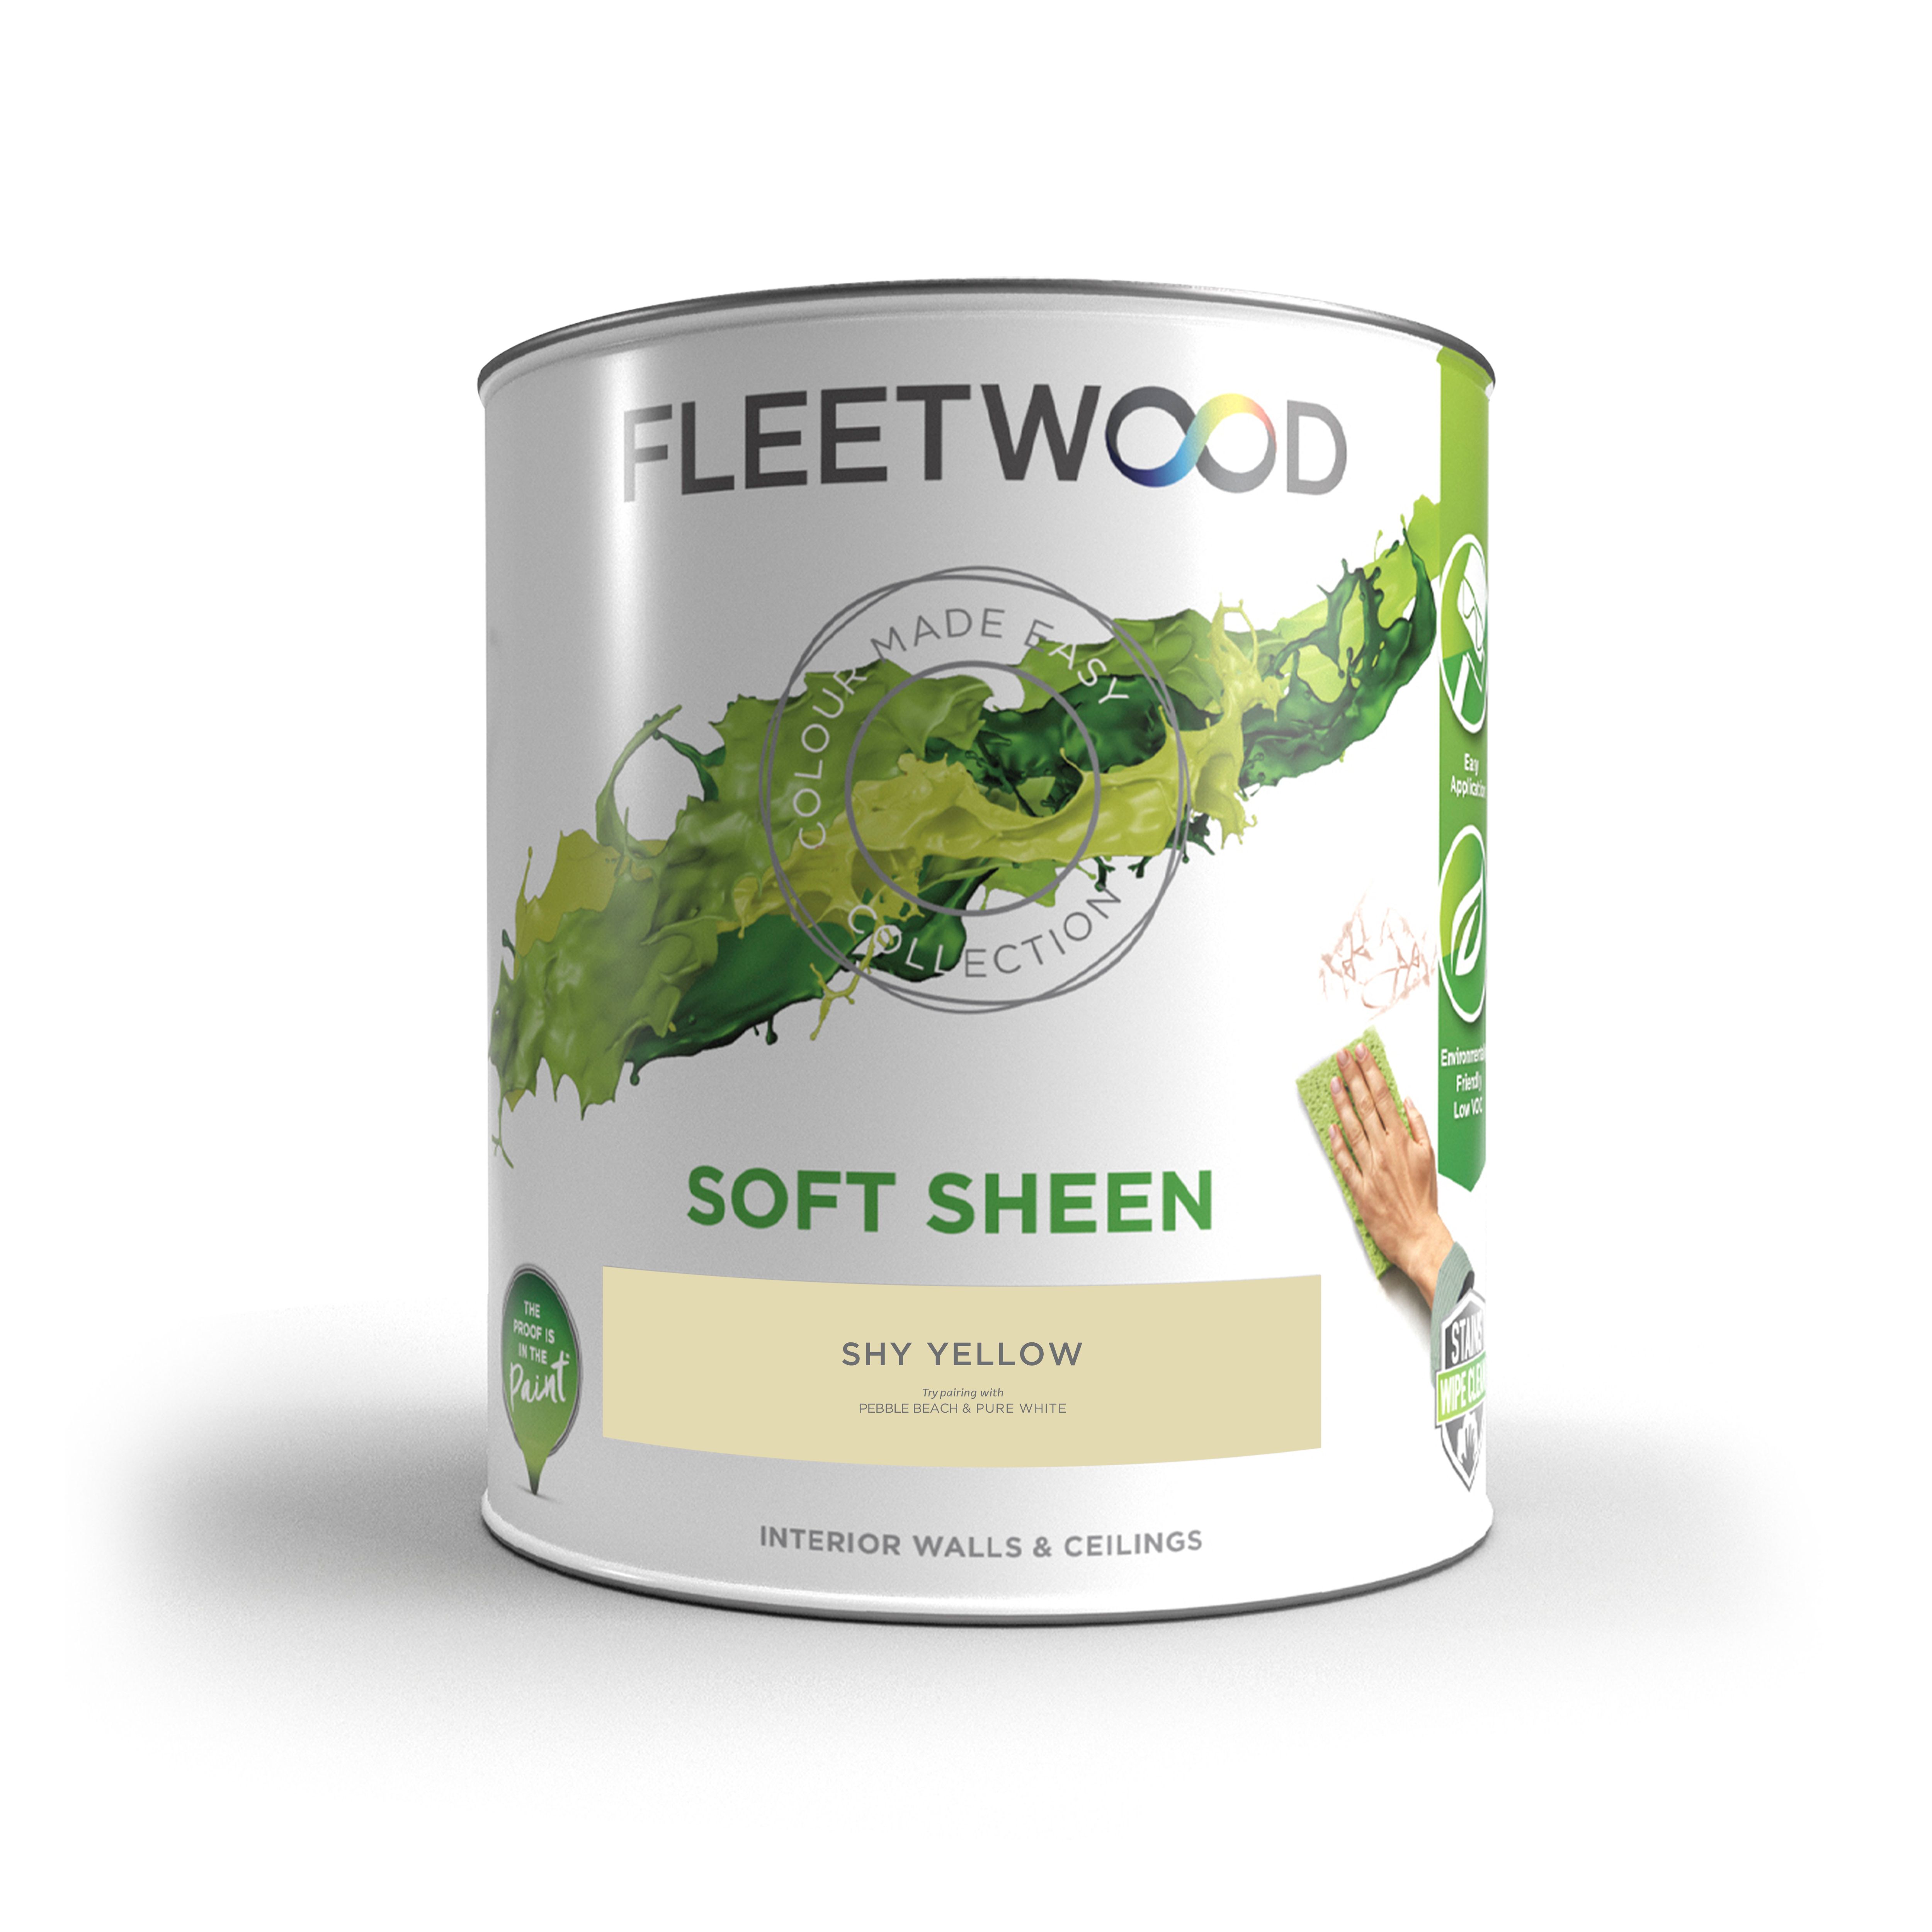 Fleetwood Shy Yellow Soft sheen Emulsion paint, 5L